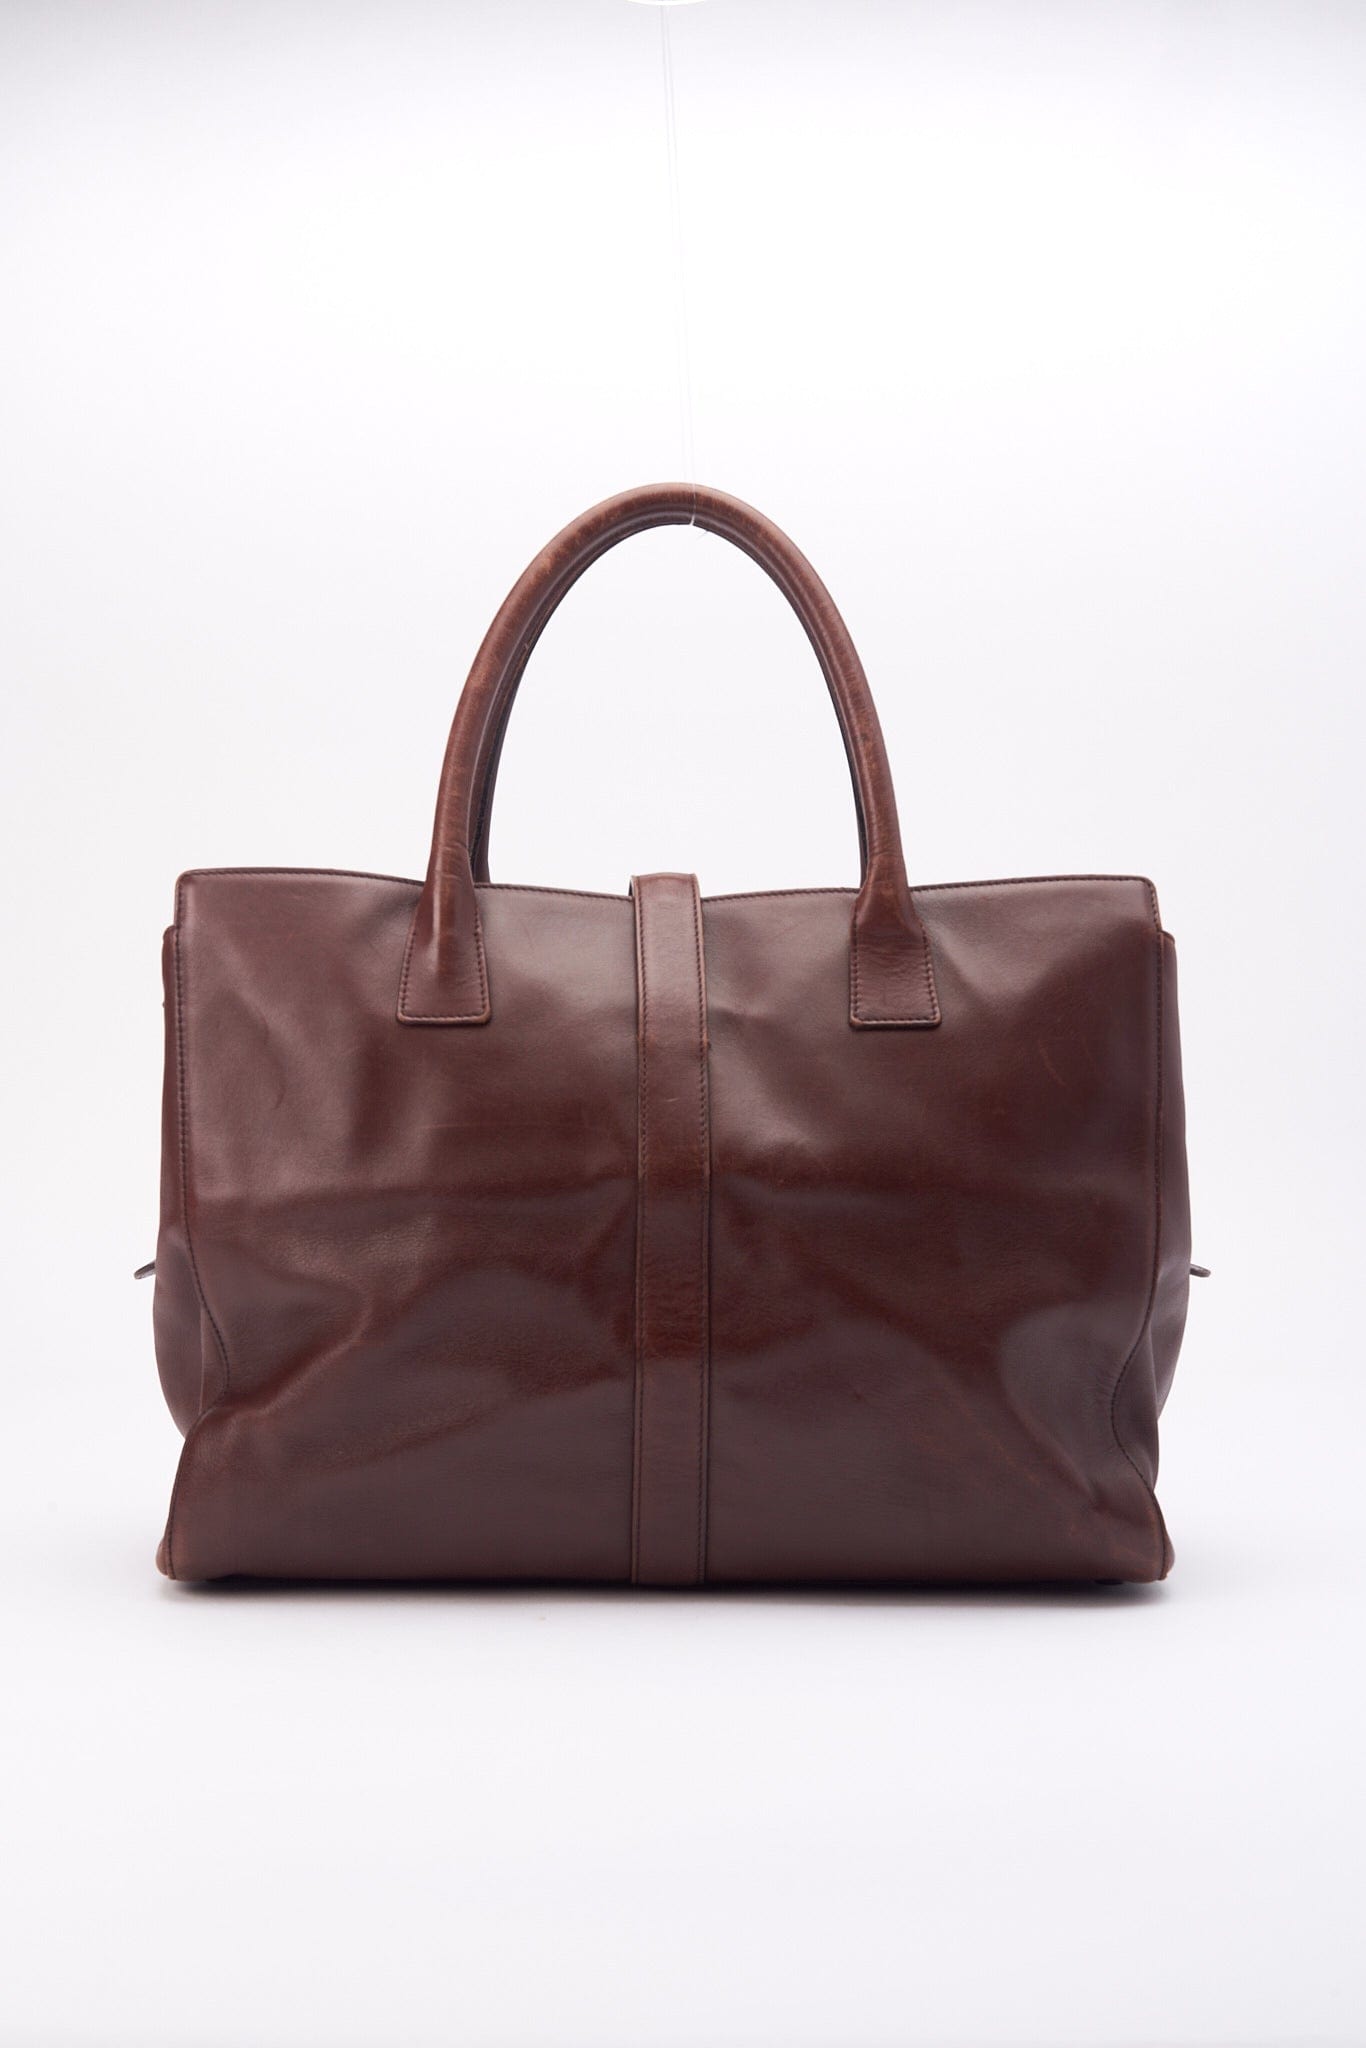 Vintage Chanel Brown Tote Bag